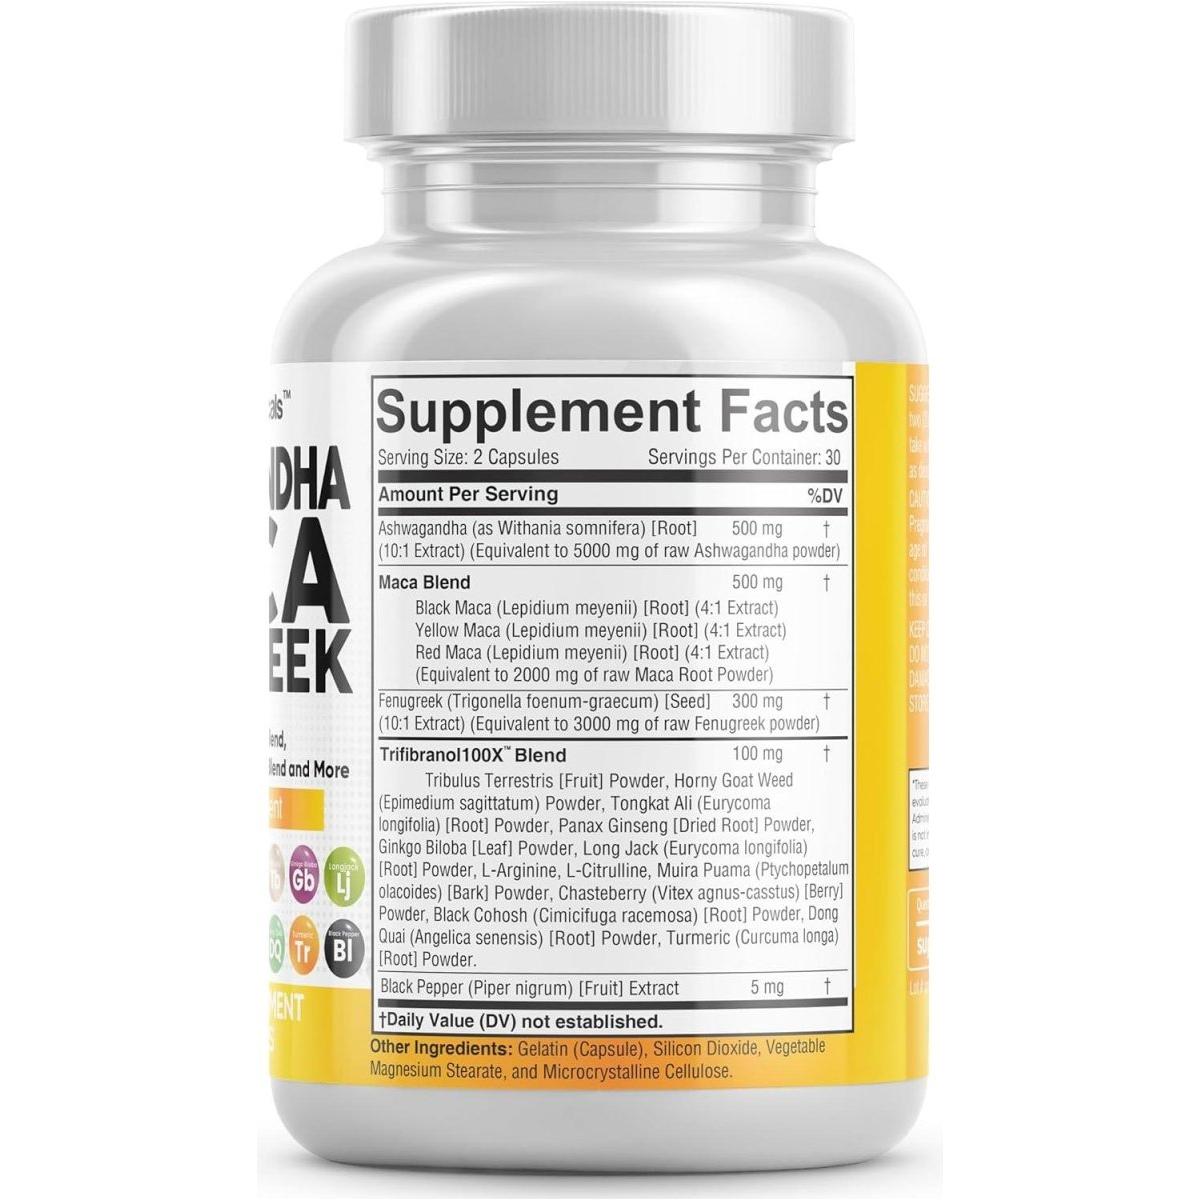 Clean Nutraceuticals 17 in 1 Maca Fenugreek Supplement - 60 Count - Glam Global UK